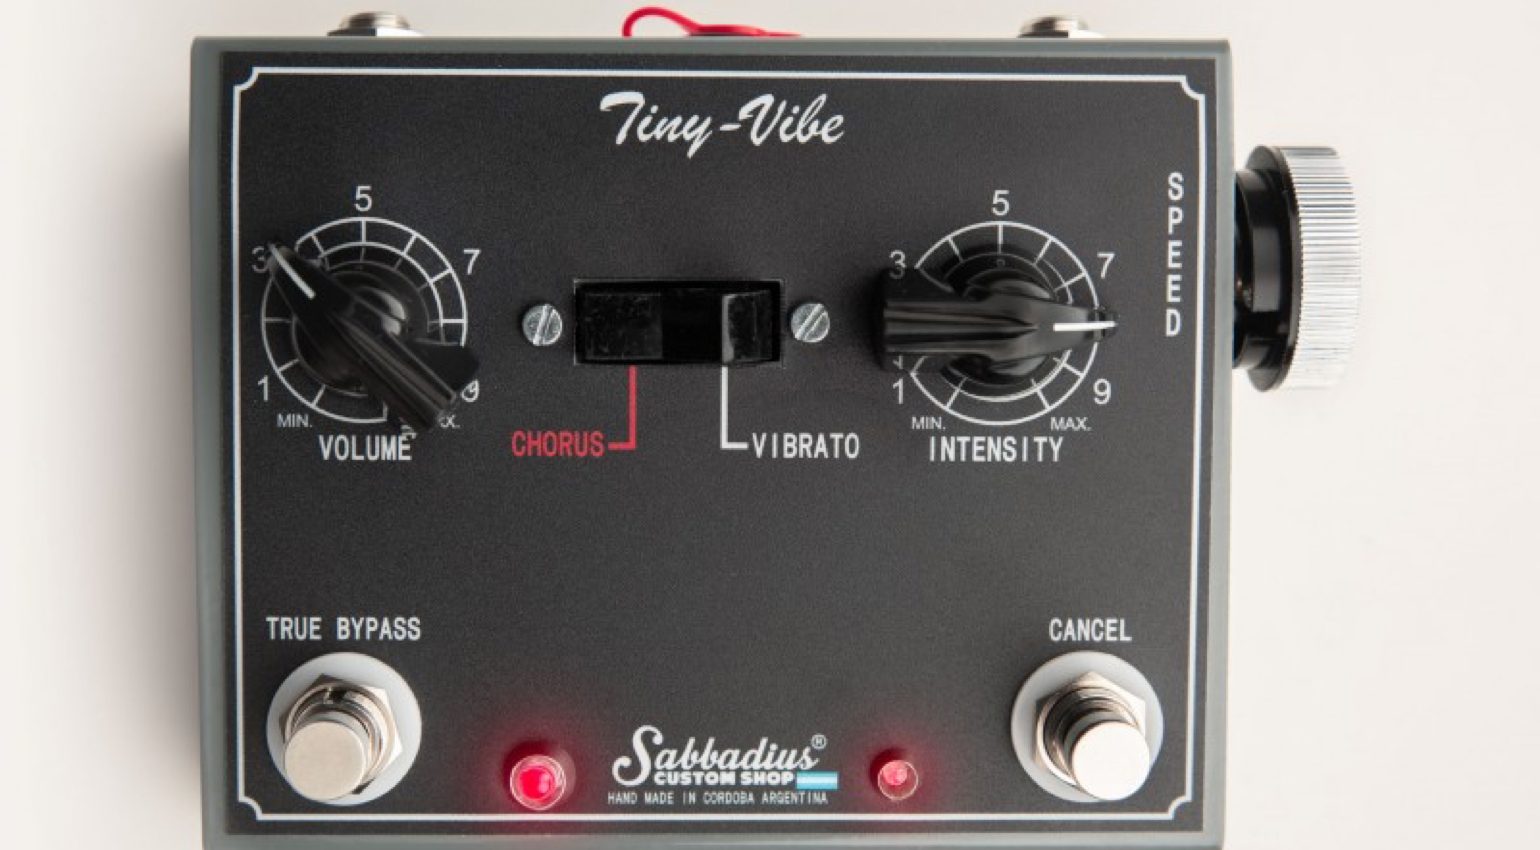 The Tiny-Vibe 68 gives you classic Hendrix tones